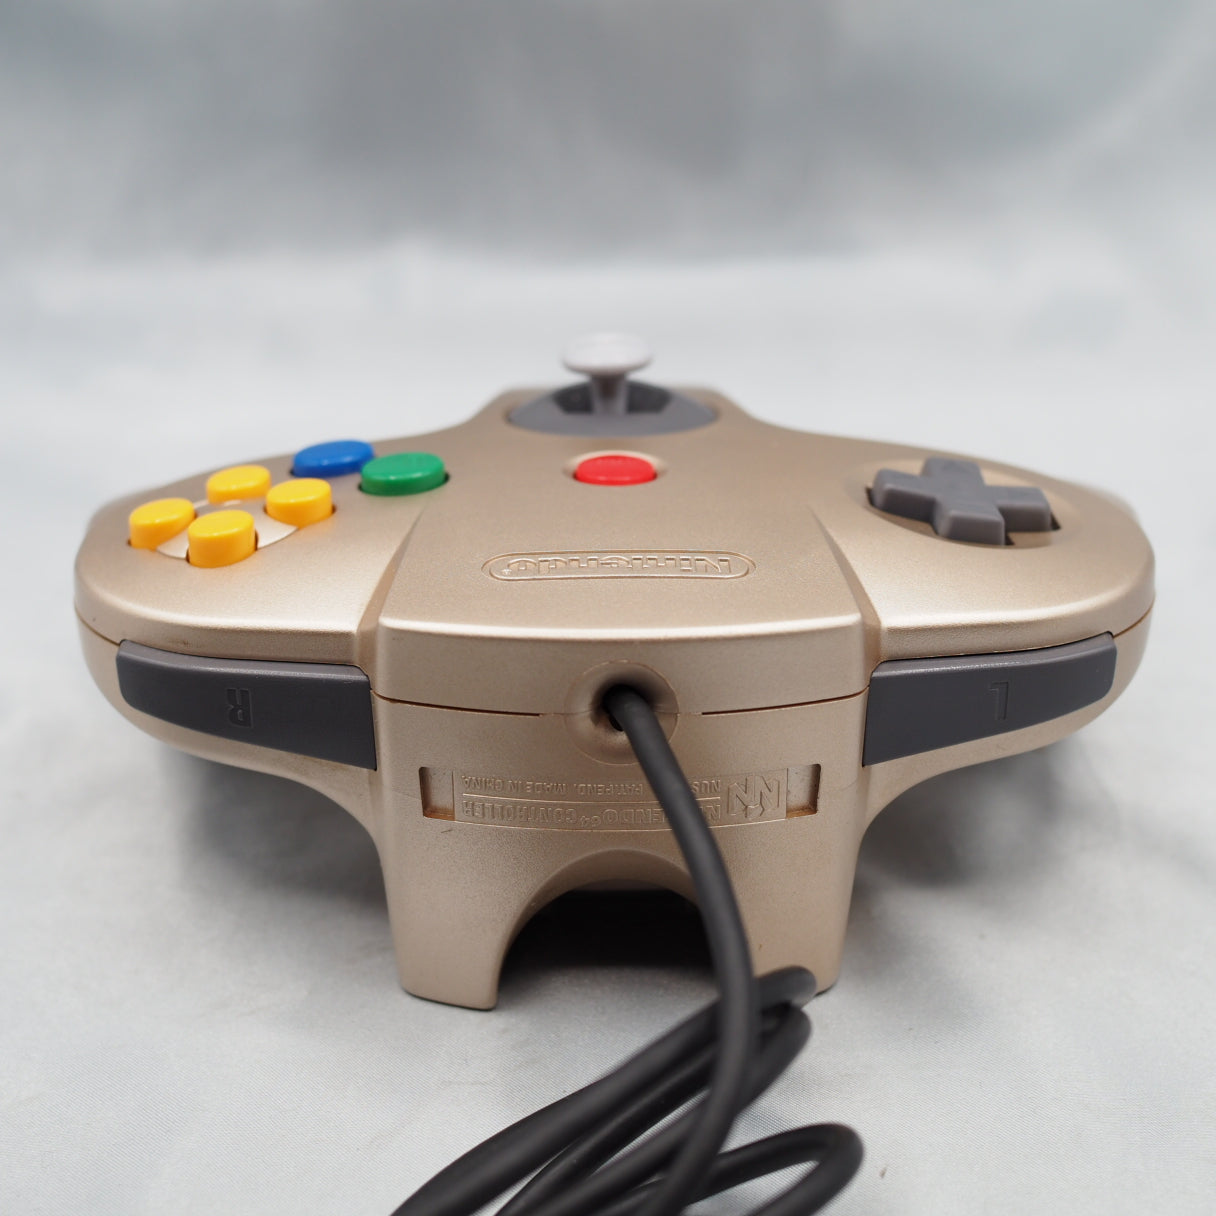 Nintendo 64 Console System GOLD NUS-001 [Region Free]